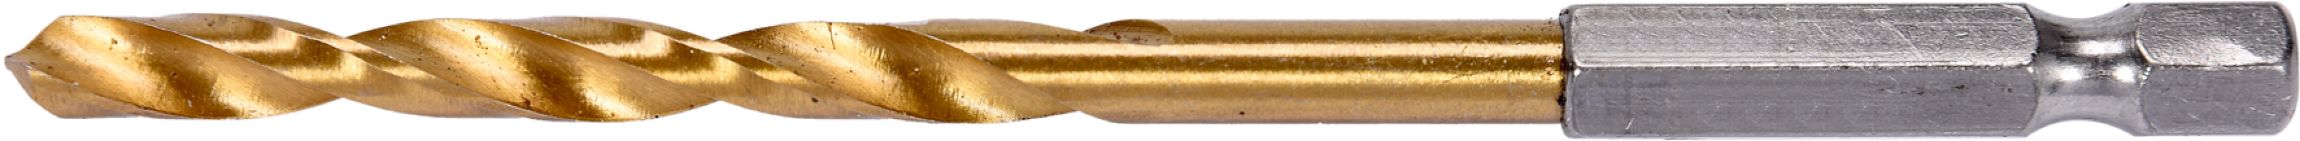 Vrtk do kovu HSS-titan 11,0mm se estihranou stopkou 1/4" Yato YT-44773